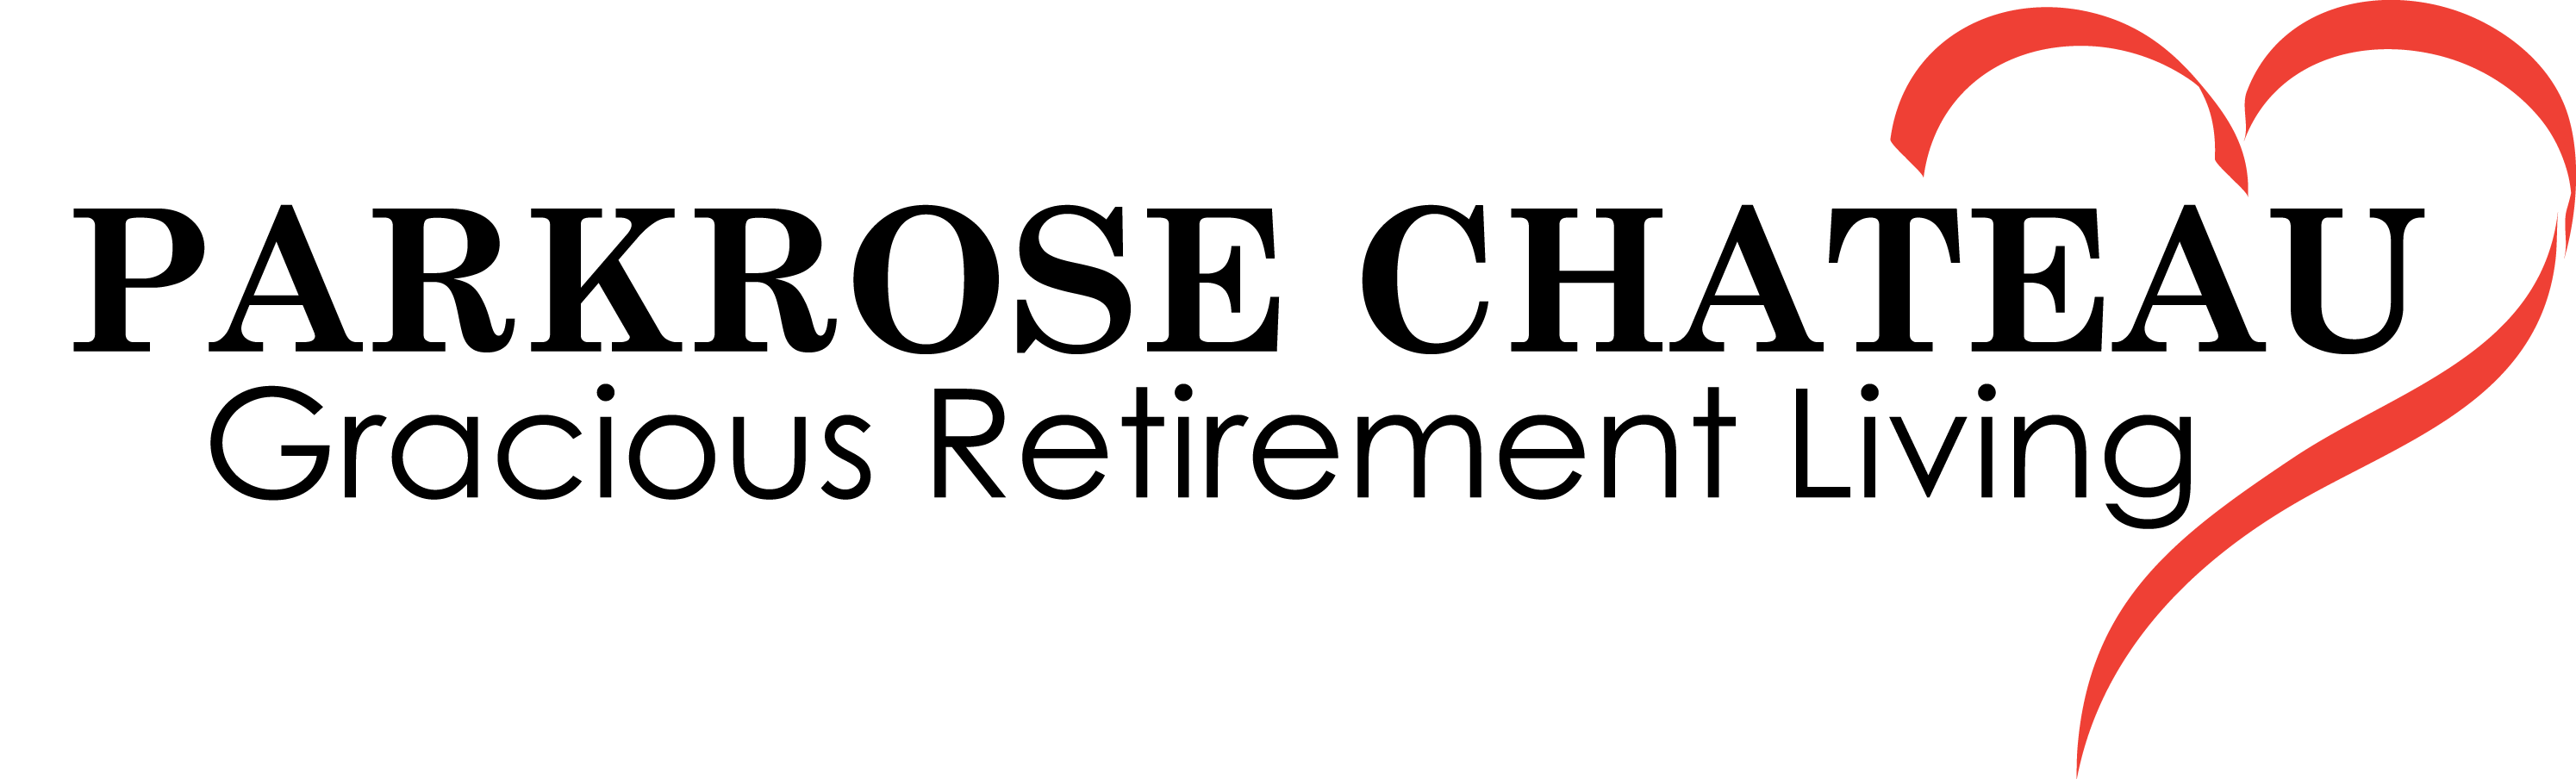 Parkrose Chateau logo